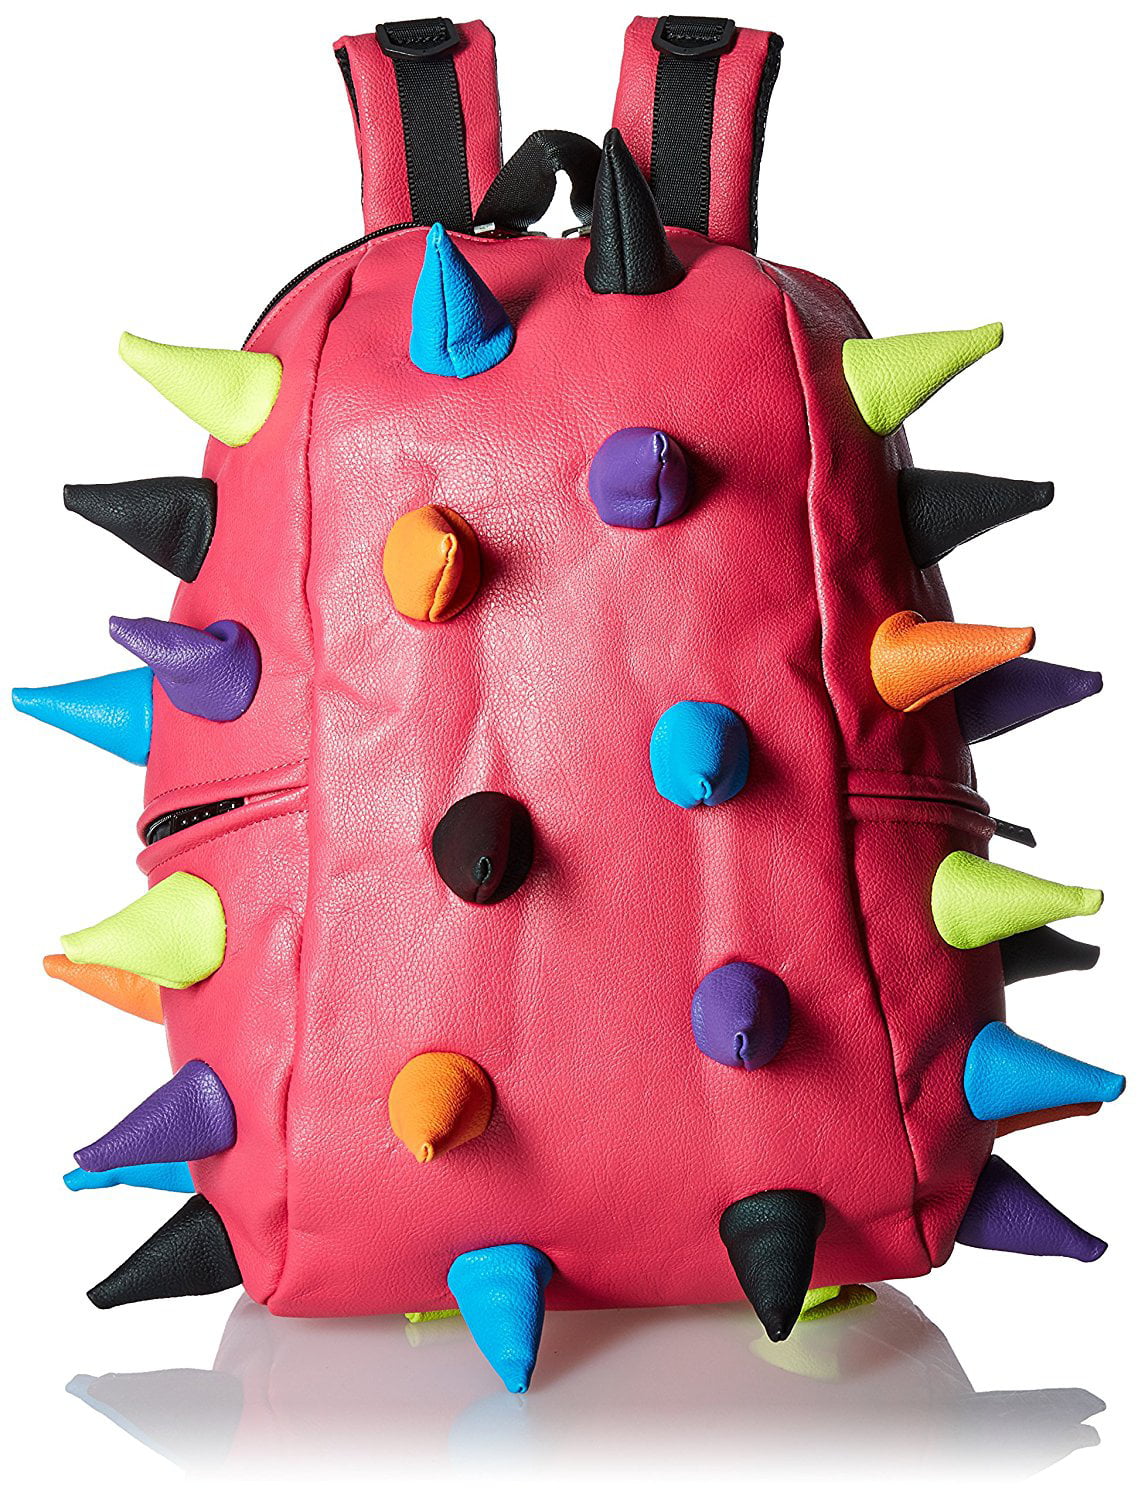 MADPAX Spike Backpack Full Pack Orange Peel 3D Spikes RRP £70.00 60% OFF £28.00 